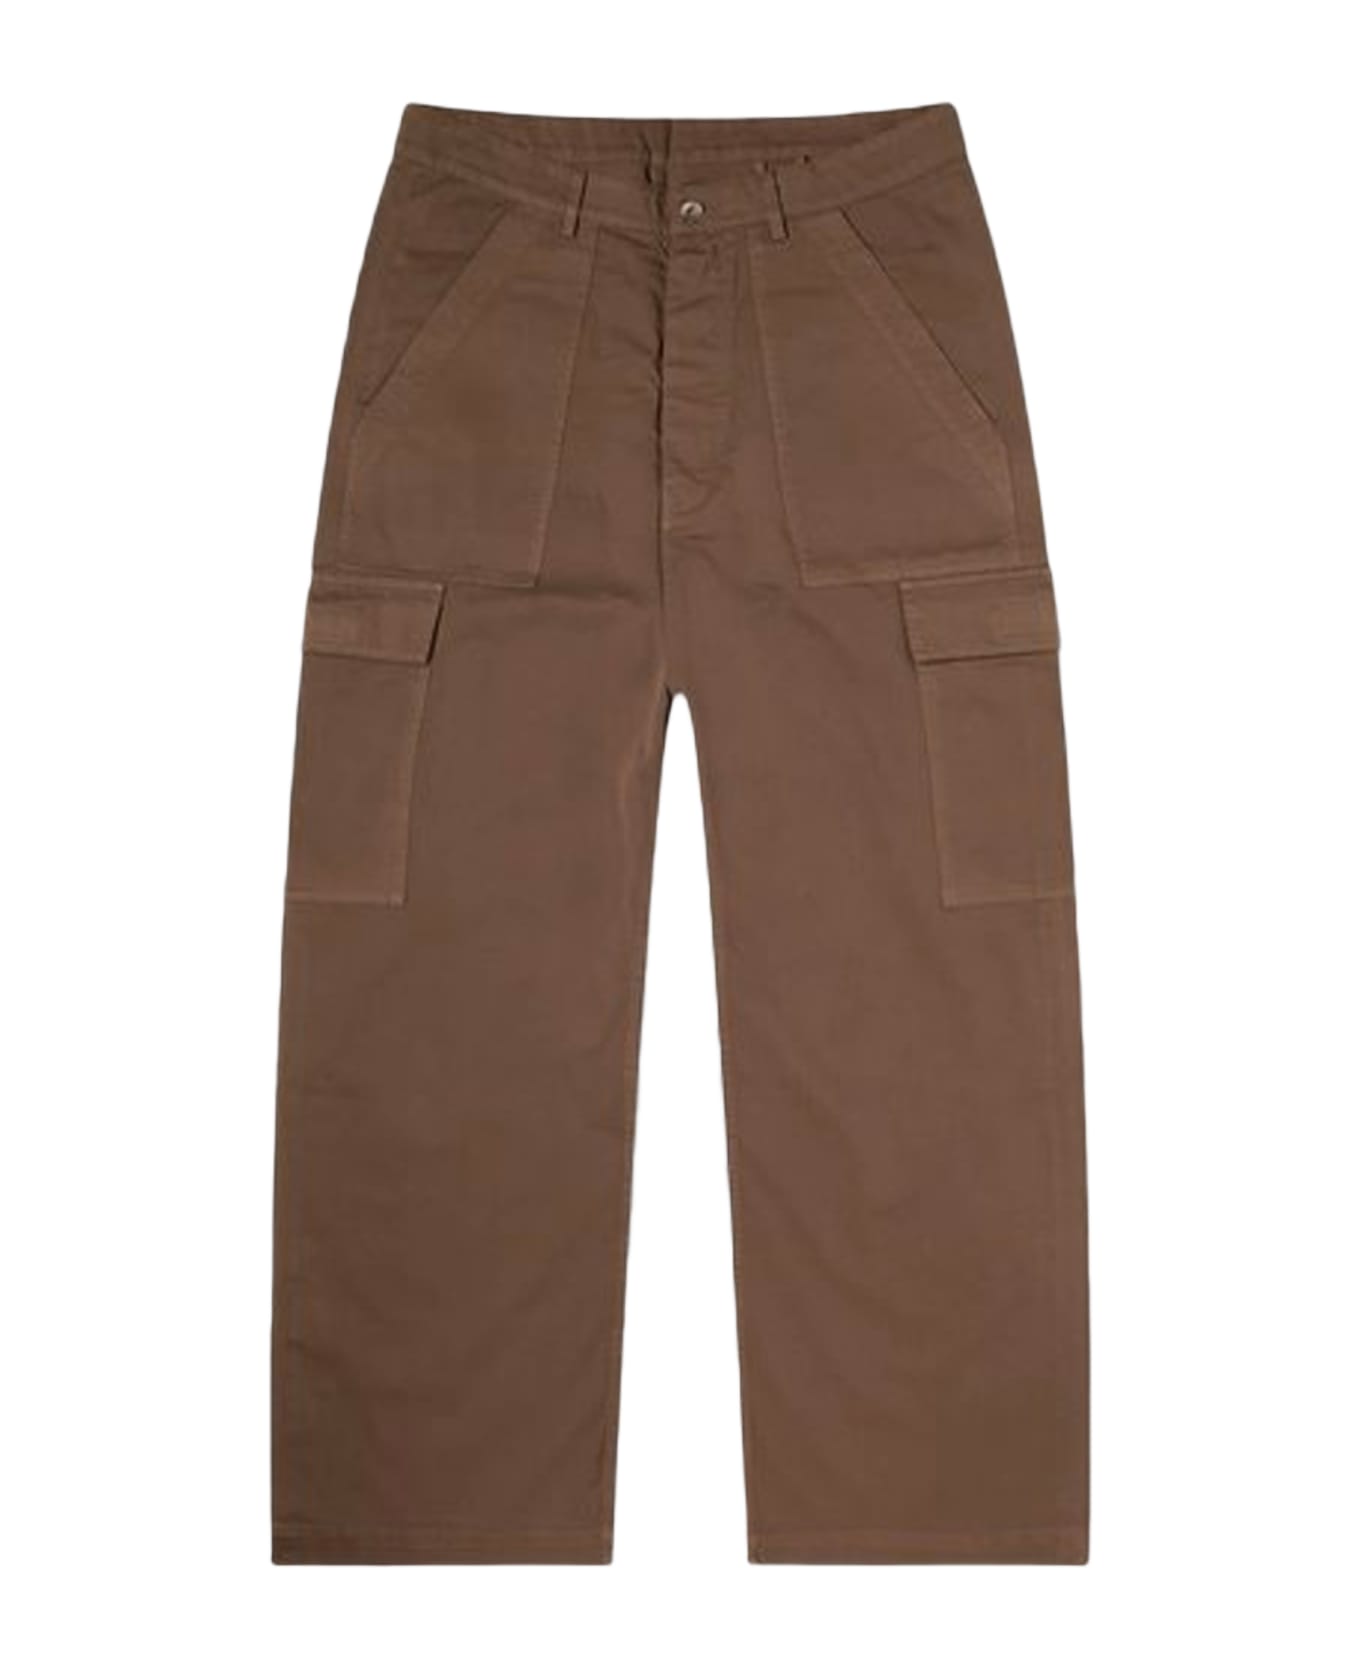 DRKSHDW Cargo Trousers Brown cotton cargo pant - Cargo trousers - Fango